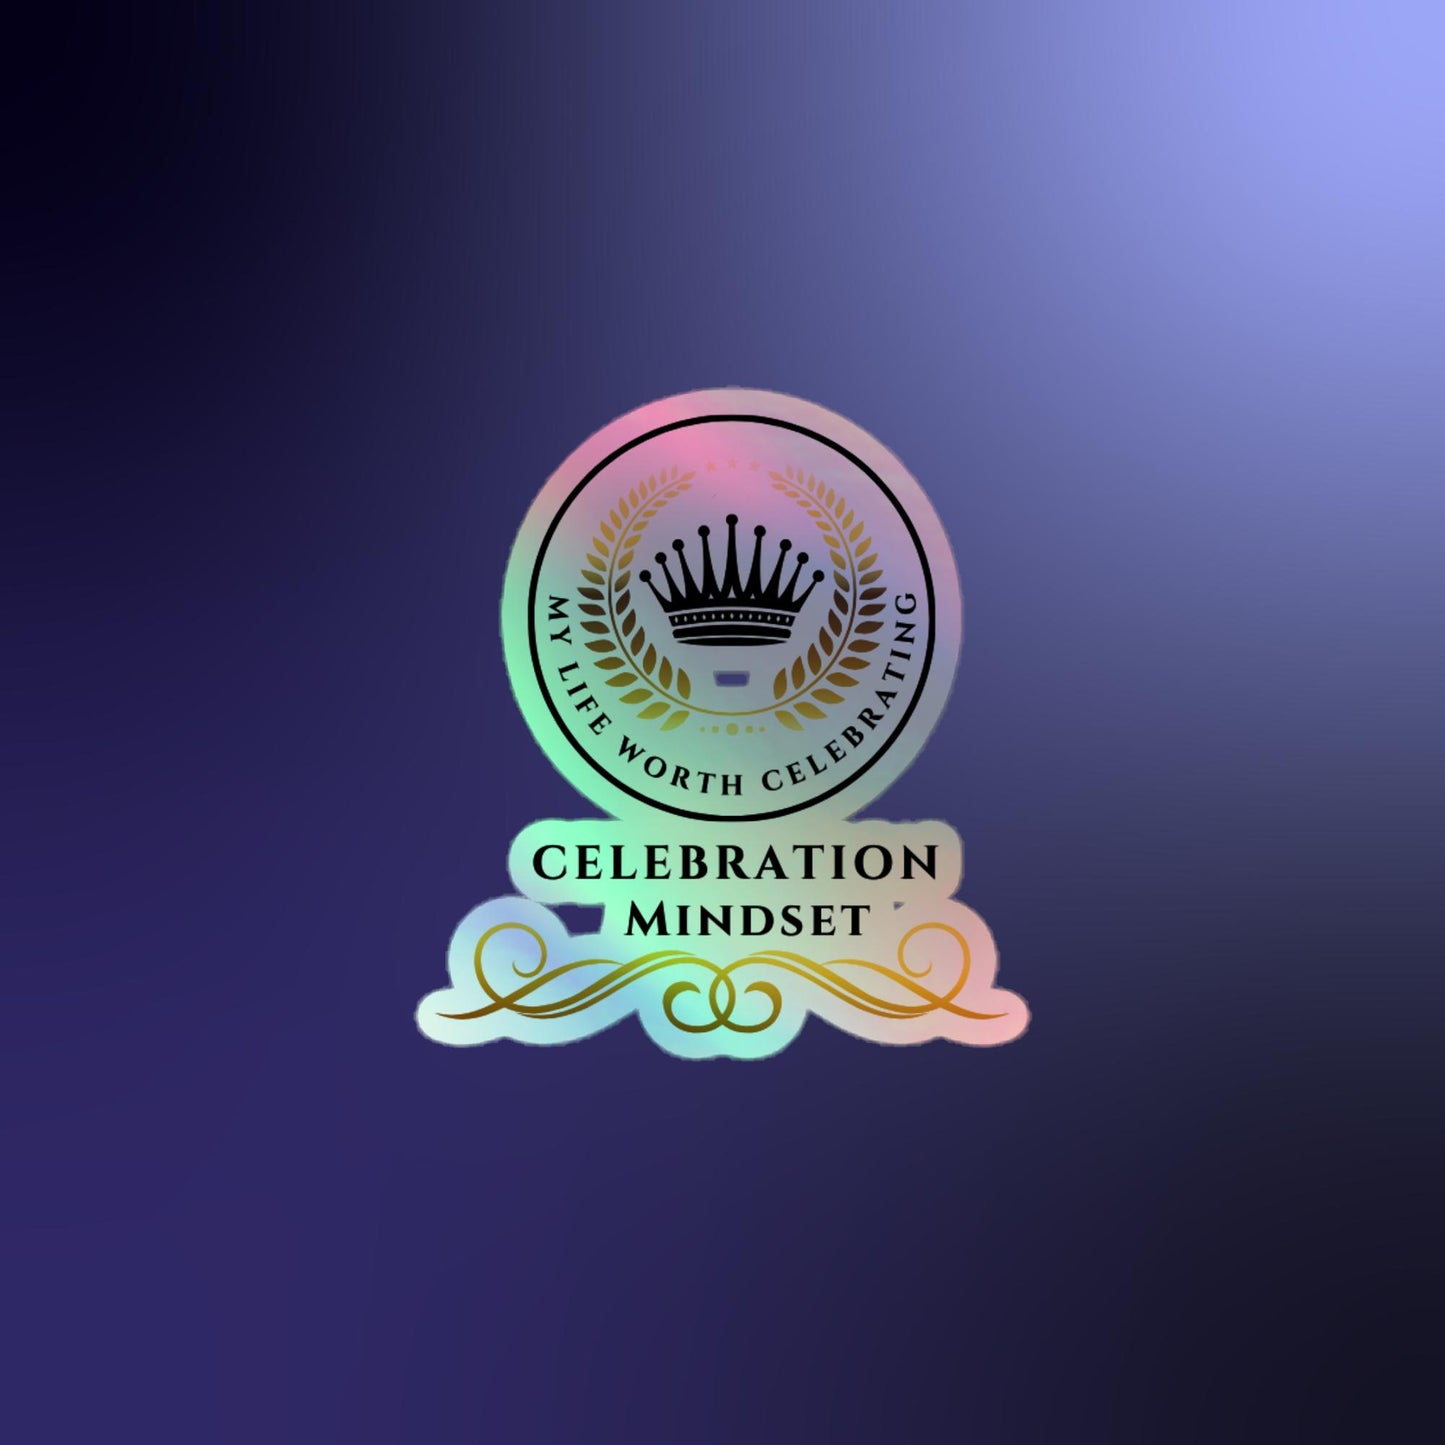 Celebration Mindset: Holographic stickers